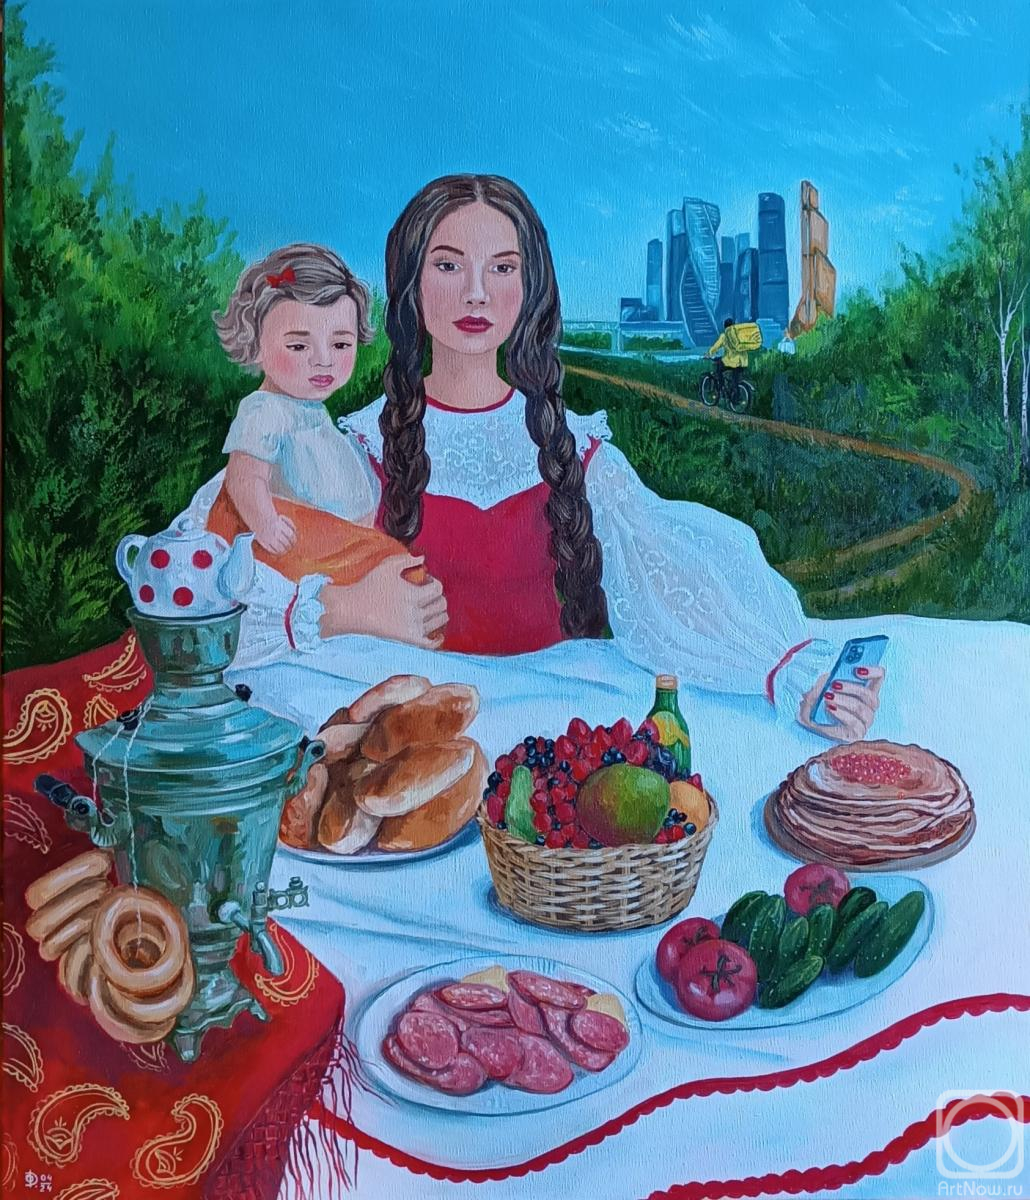 Dmitrieva Olga. Tablecloth-self-made